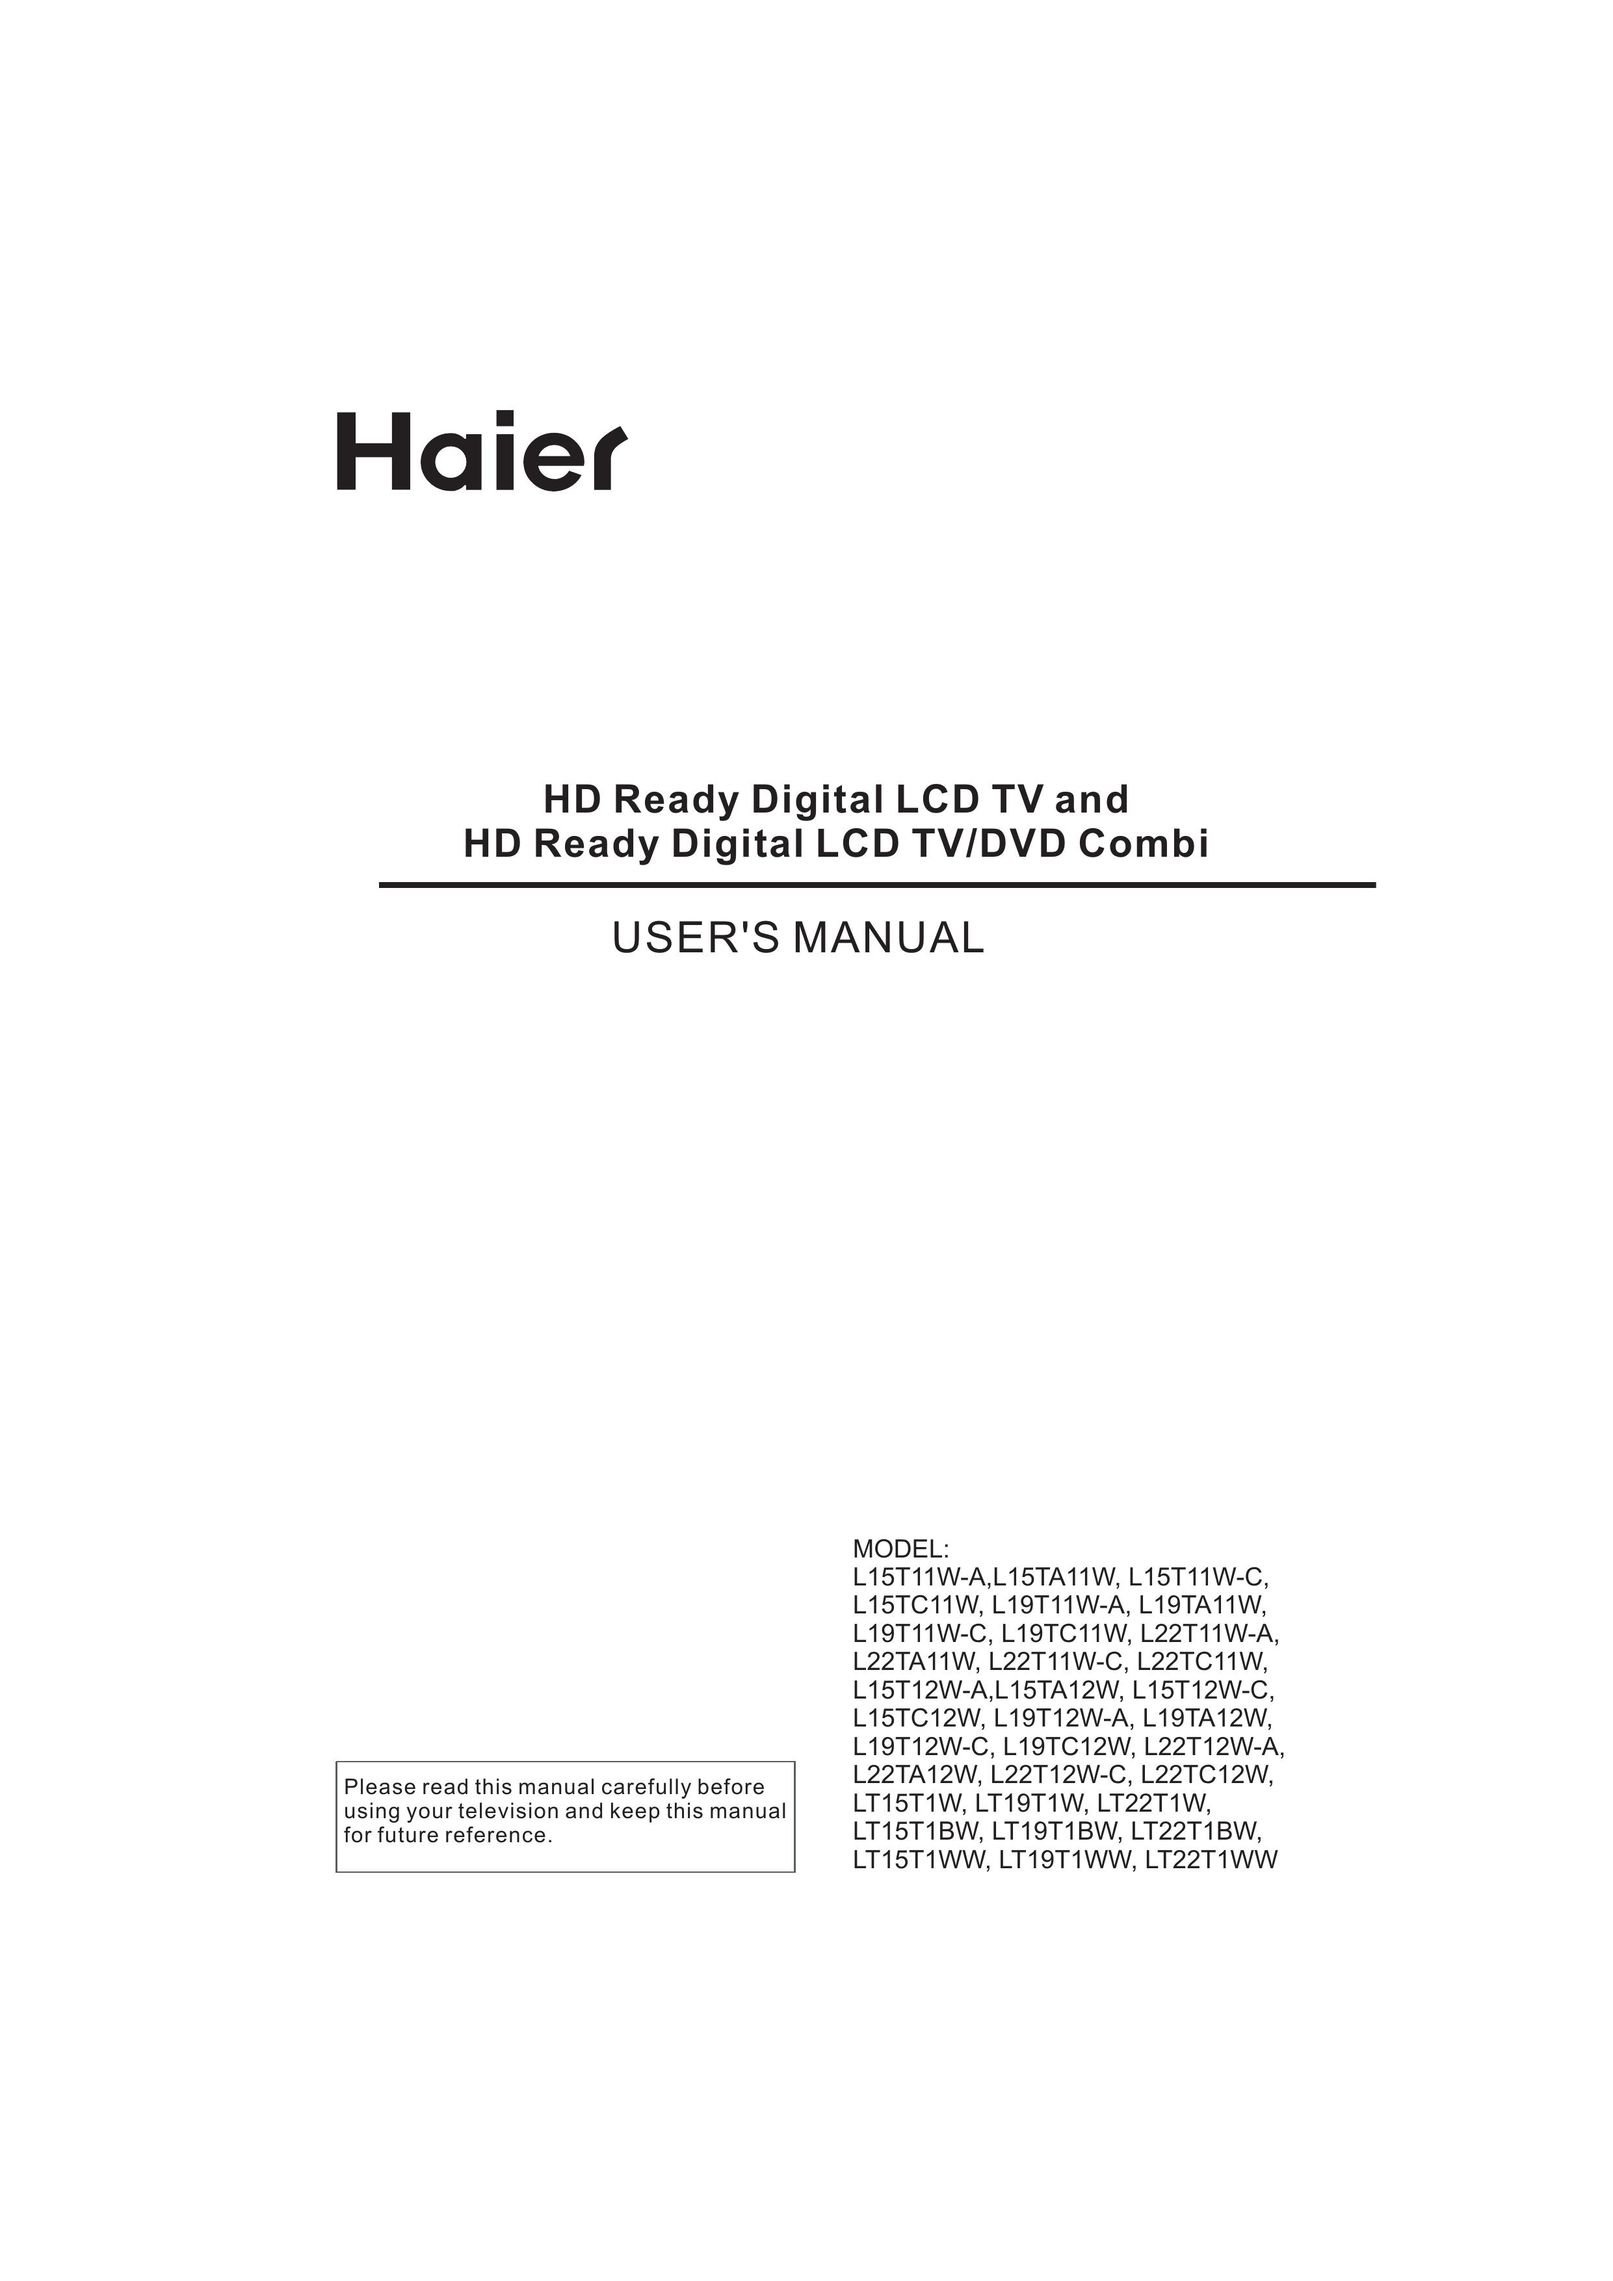 Haier L19TA12W TV DVD Combo User Manual